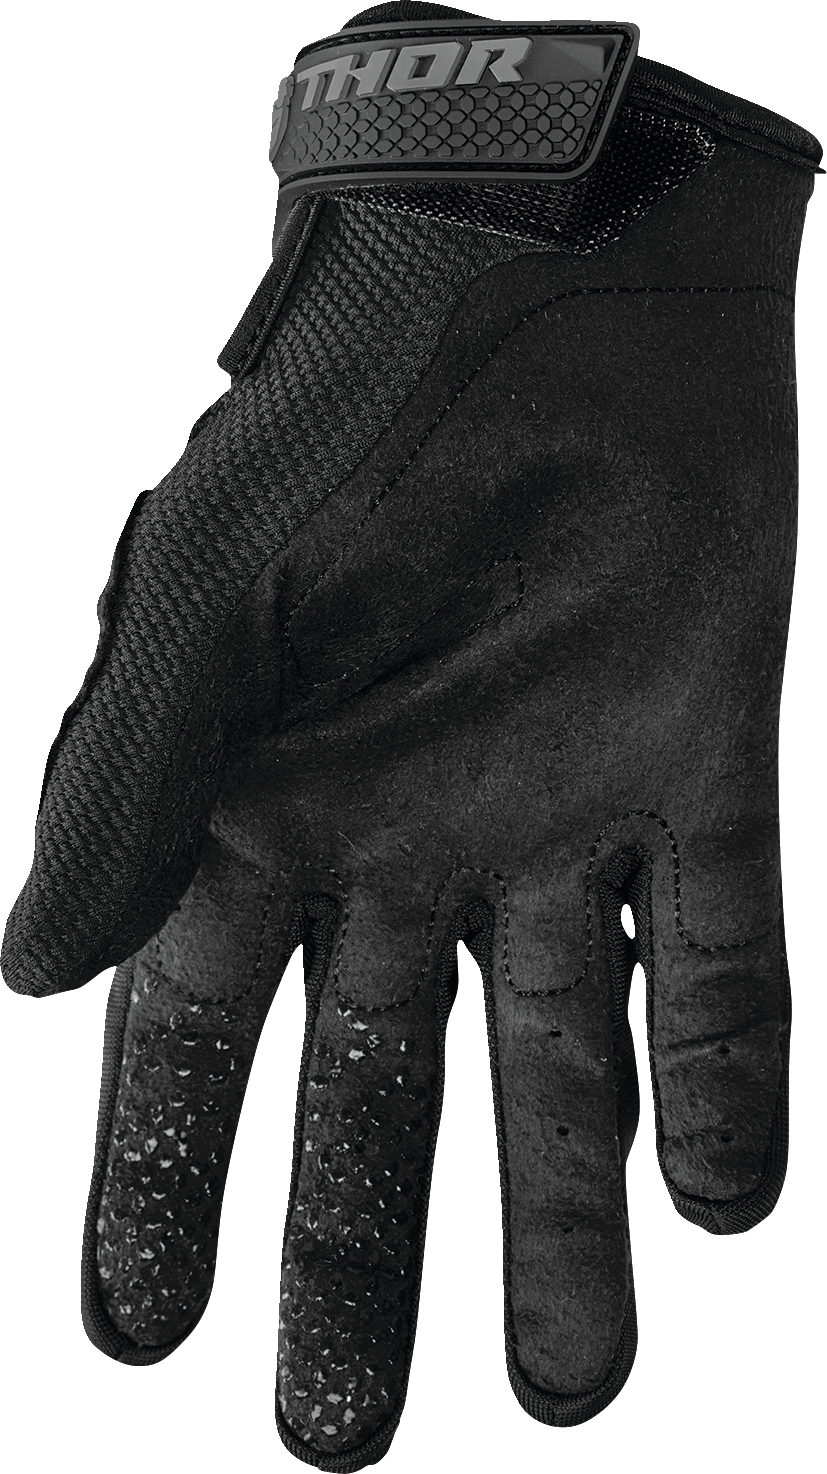 THOR Women's Sector Gloves - Black/Gray - Large 3331-0240